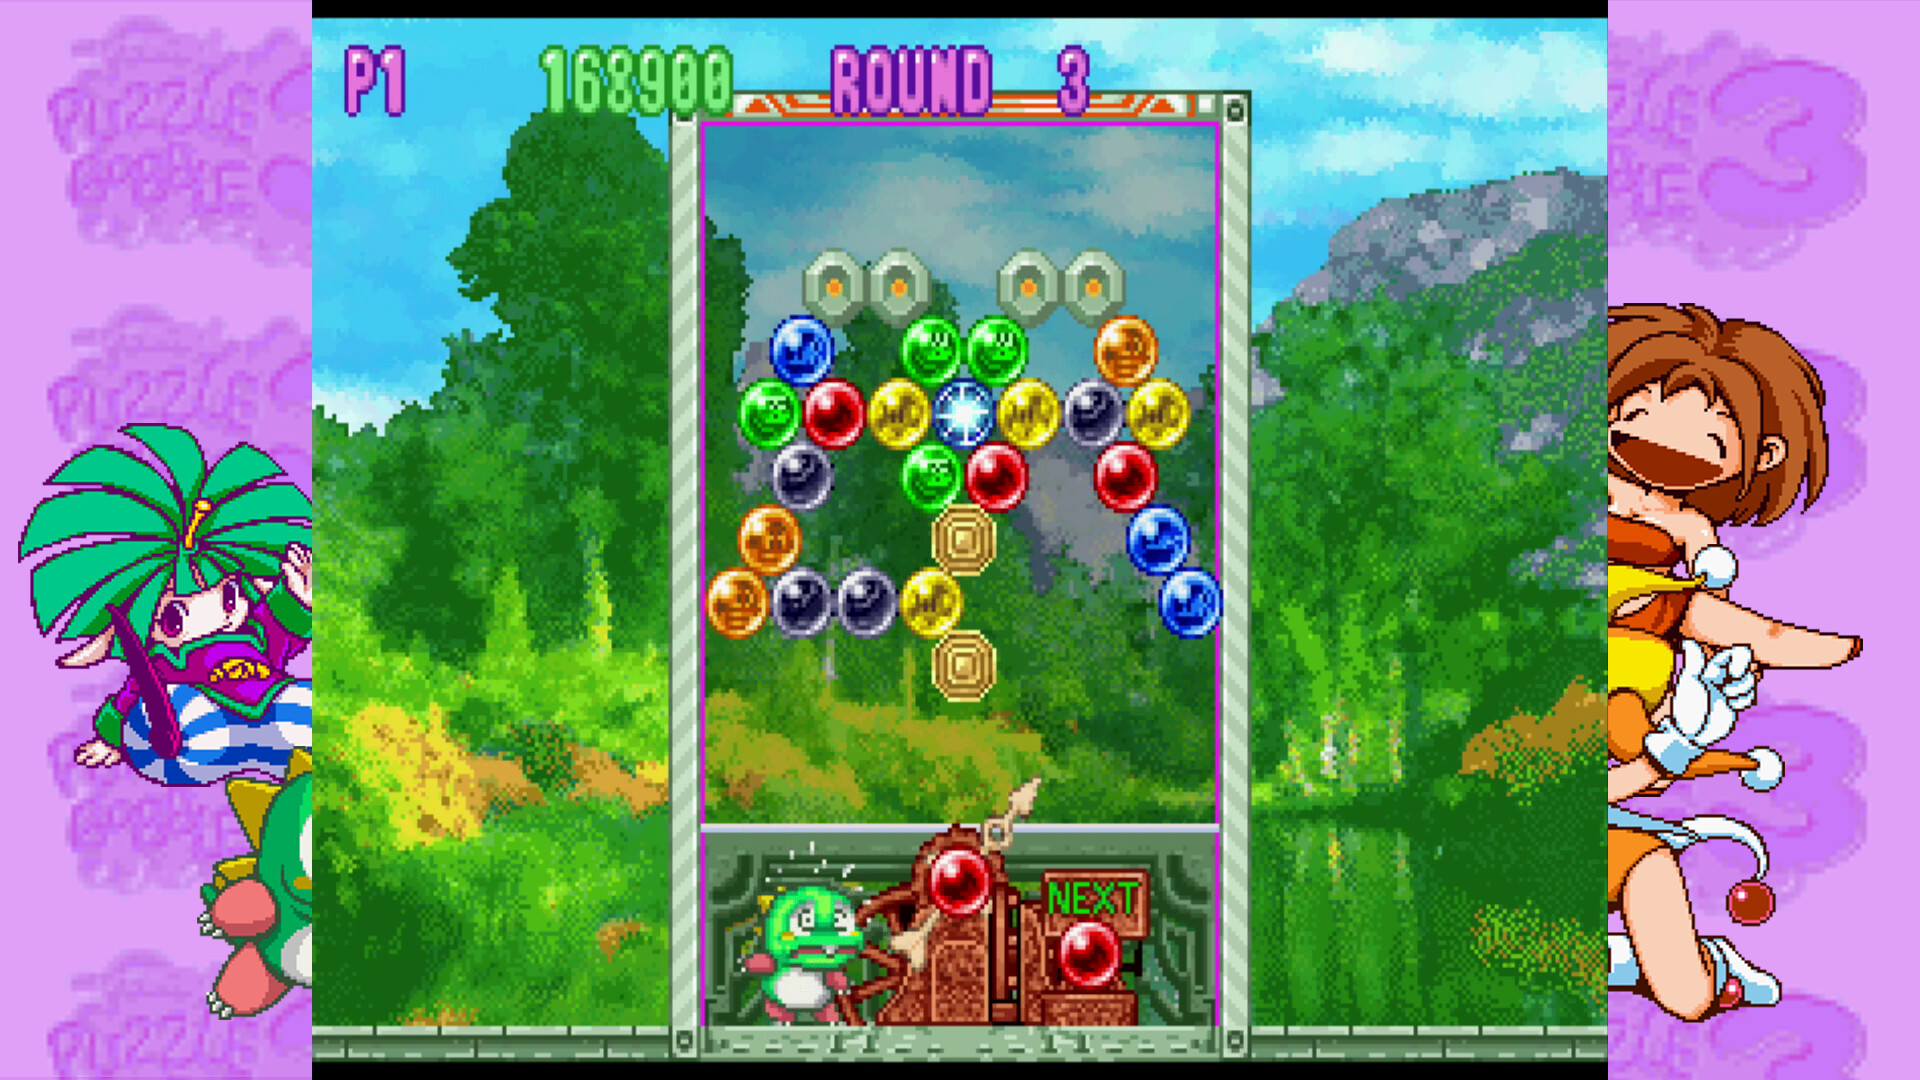 Puzzle Bobble™2X/BUST-A-MOVE™2 Arcade Edition & Puzzle Bobble™3